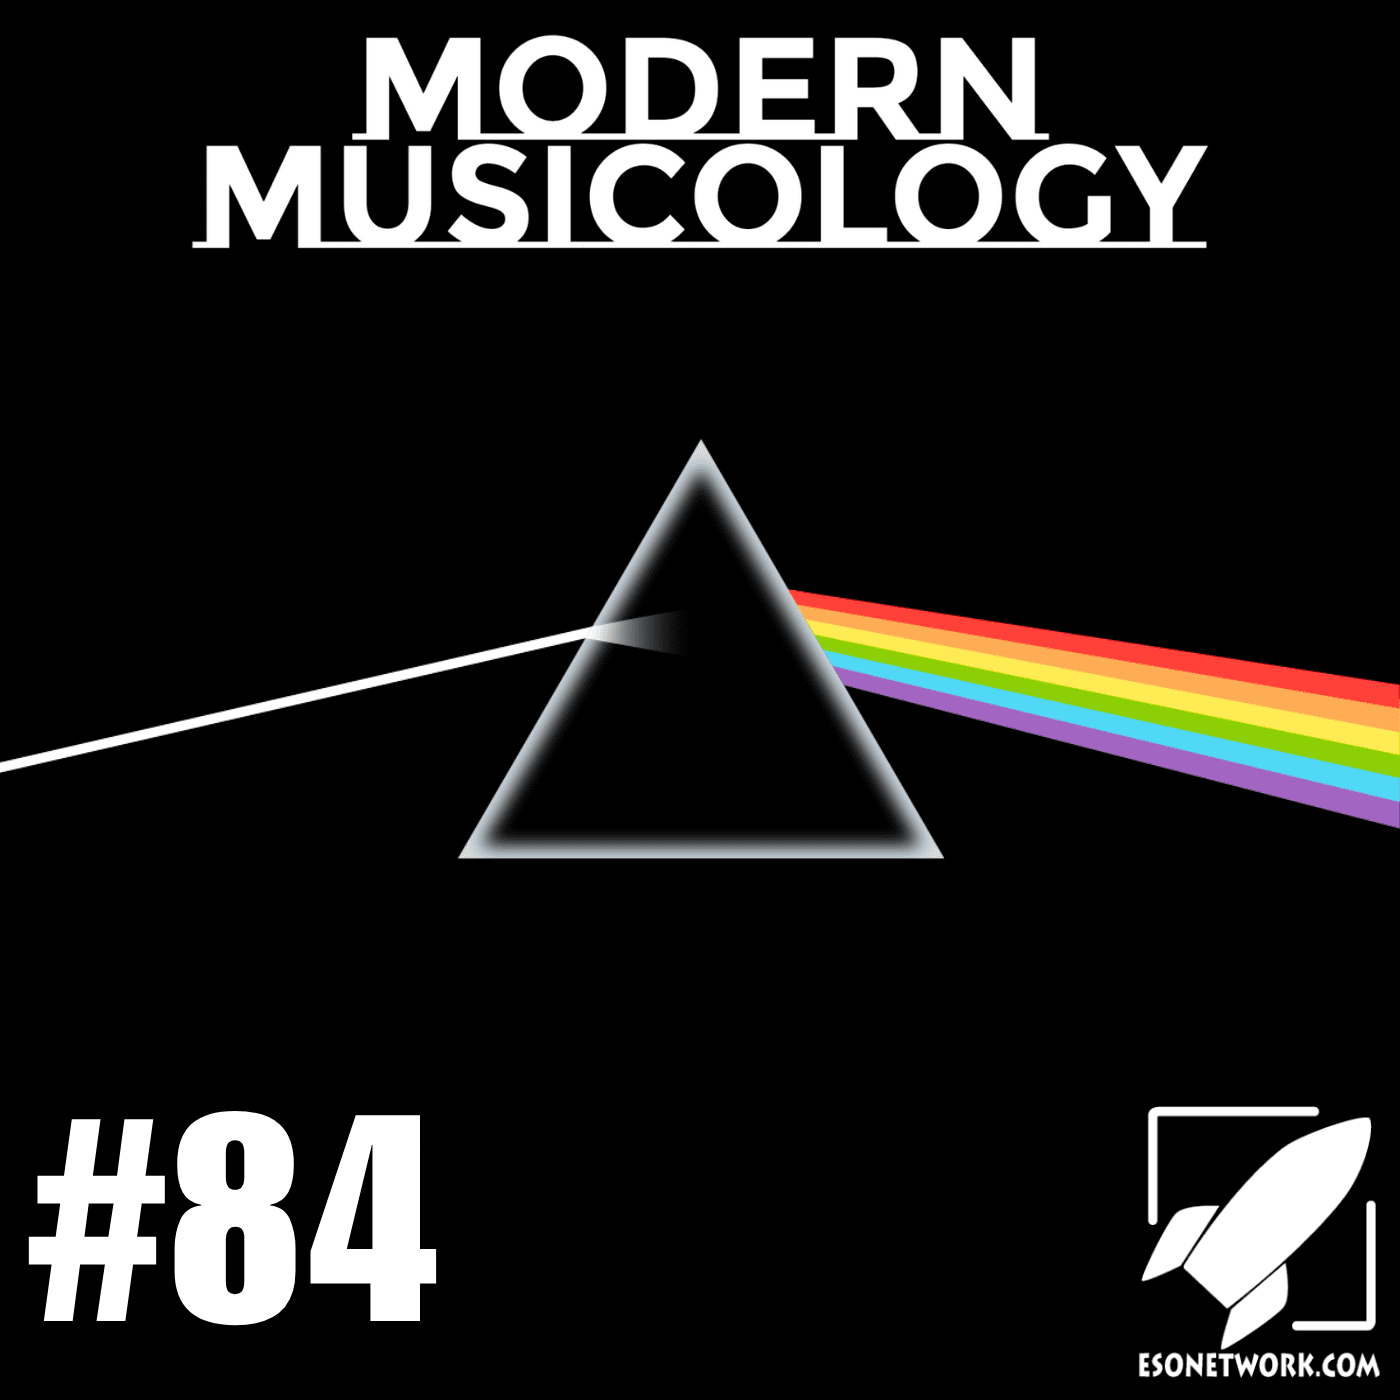 Modern Musicology #101 - She's a Badass! - The ESO Network